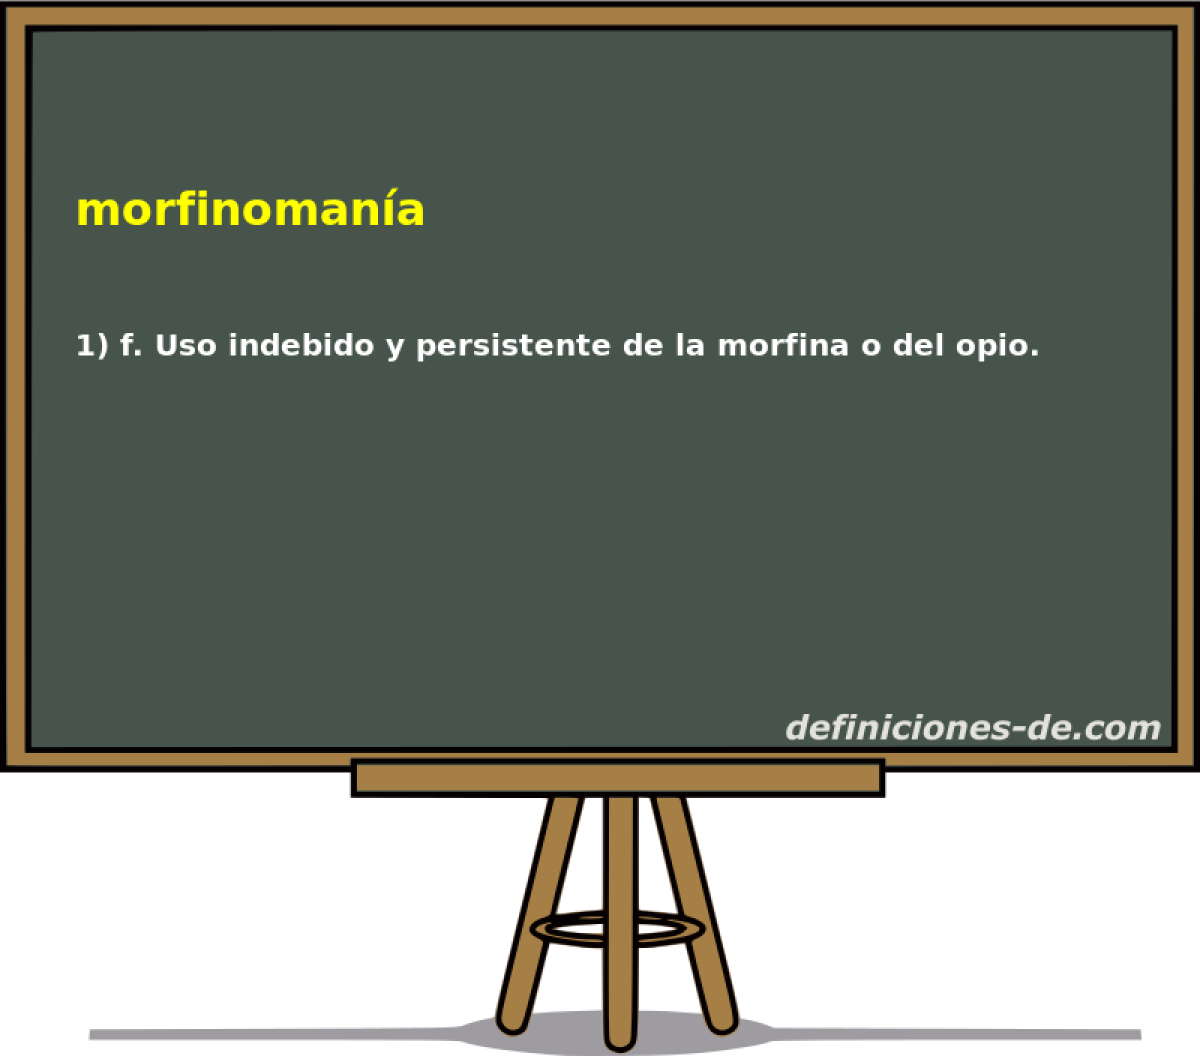 morfinomana 